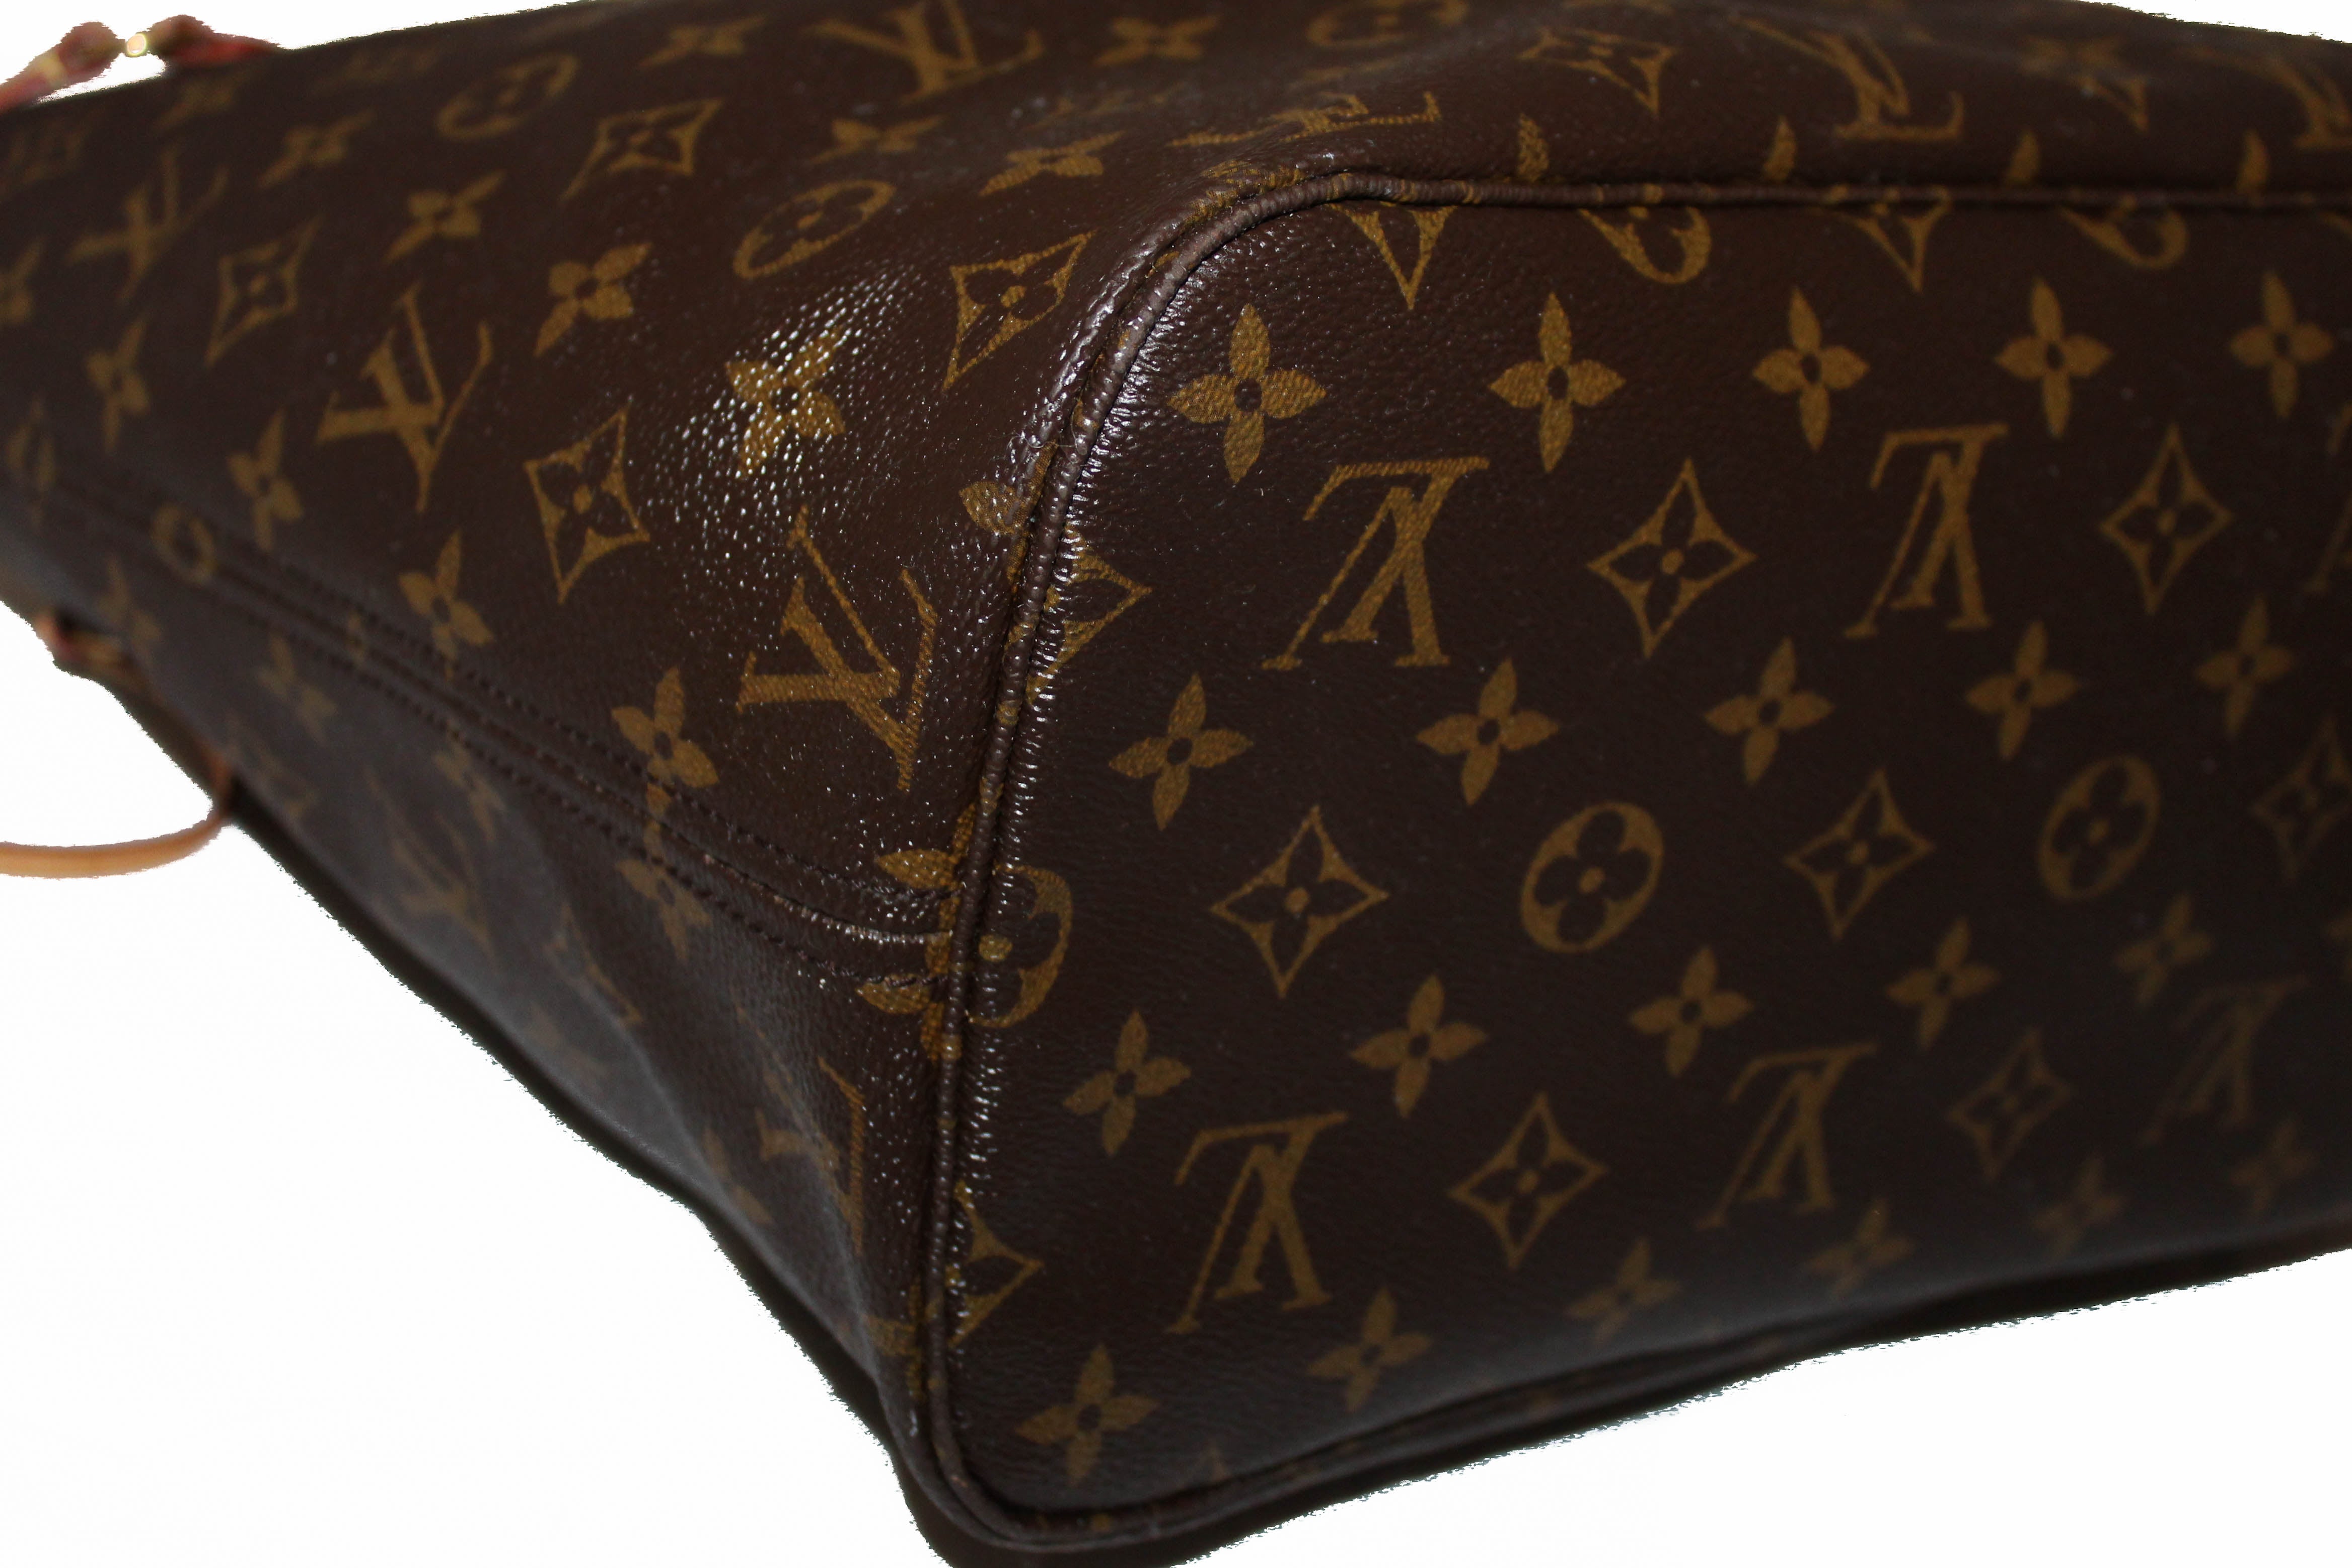 Authentic Louis Vuitton Monogram Neverfull MM Tote Bag